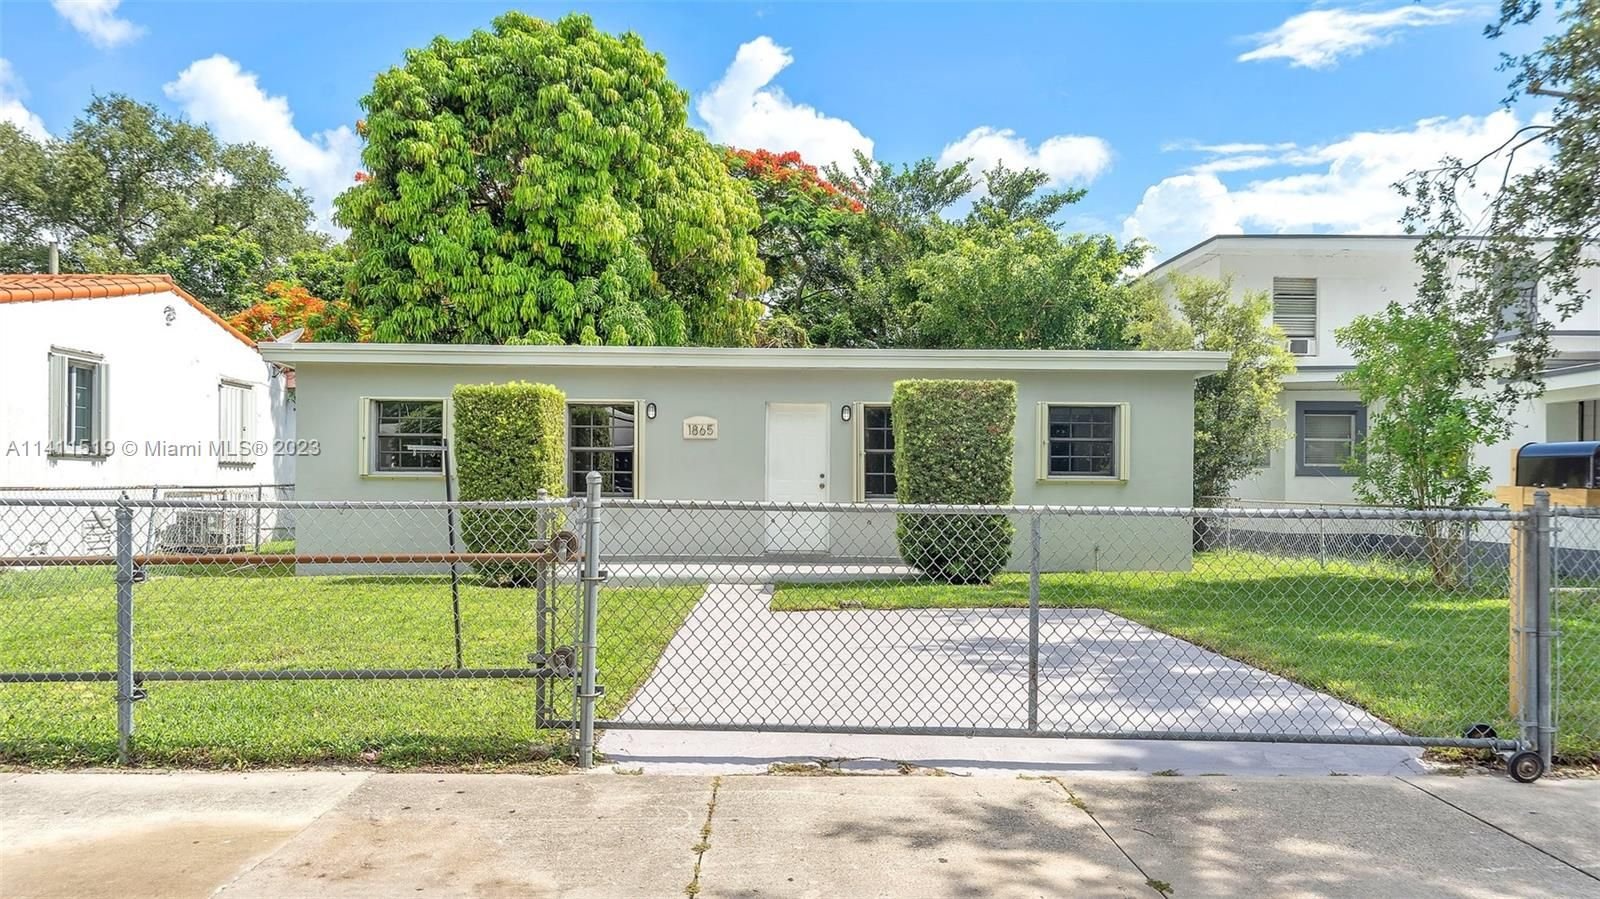 Real estate property located at 1865 50th St, Miami-Dade County, Miami, FL